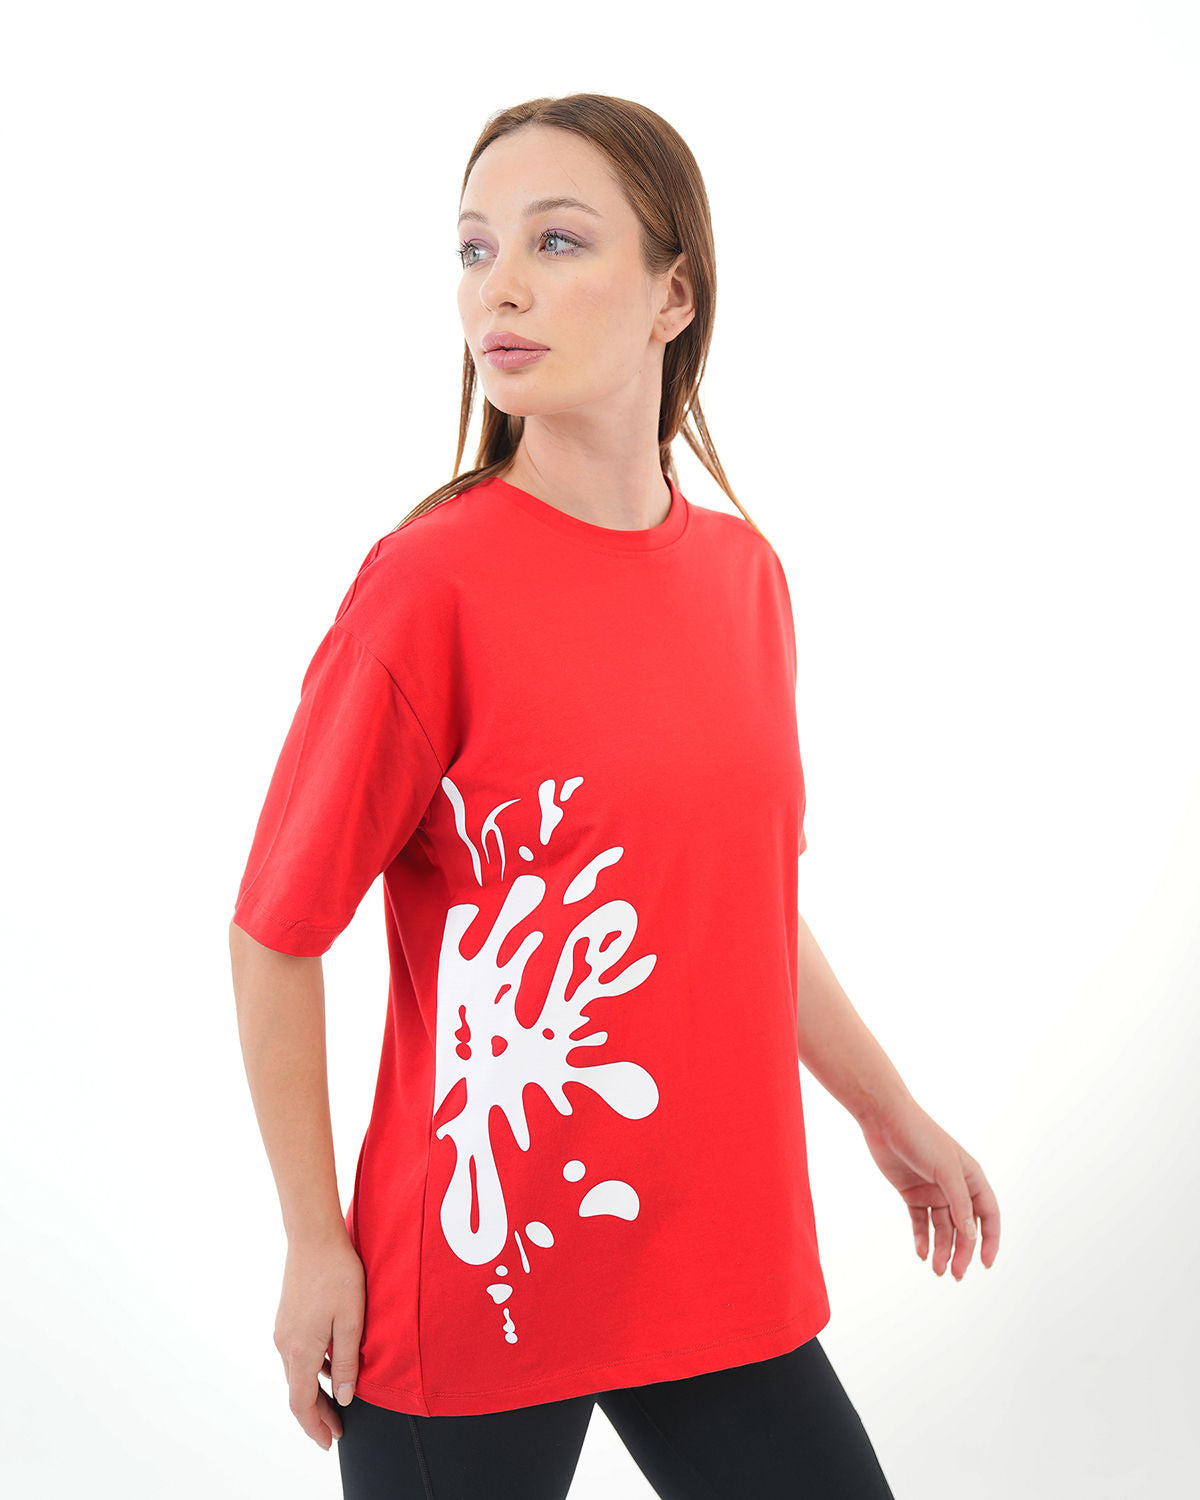 Oversized Splash Women's T-Shirt - Red with White print